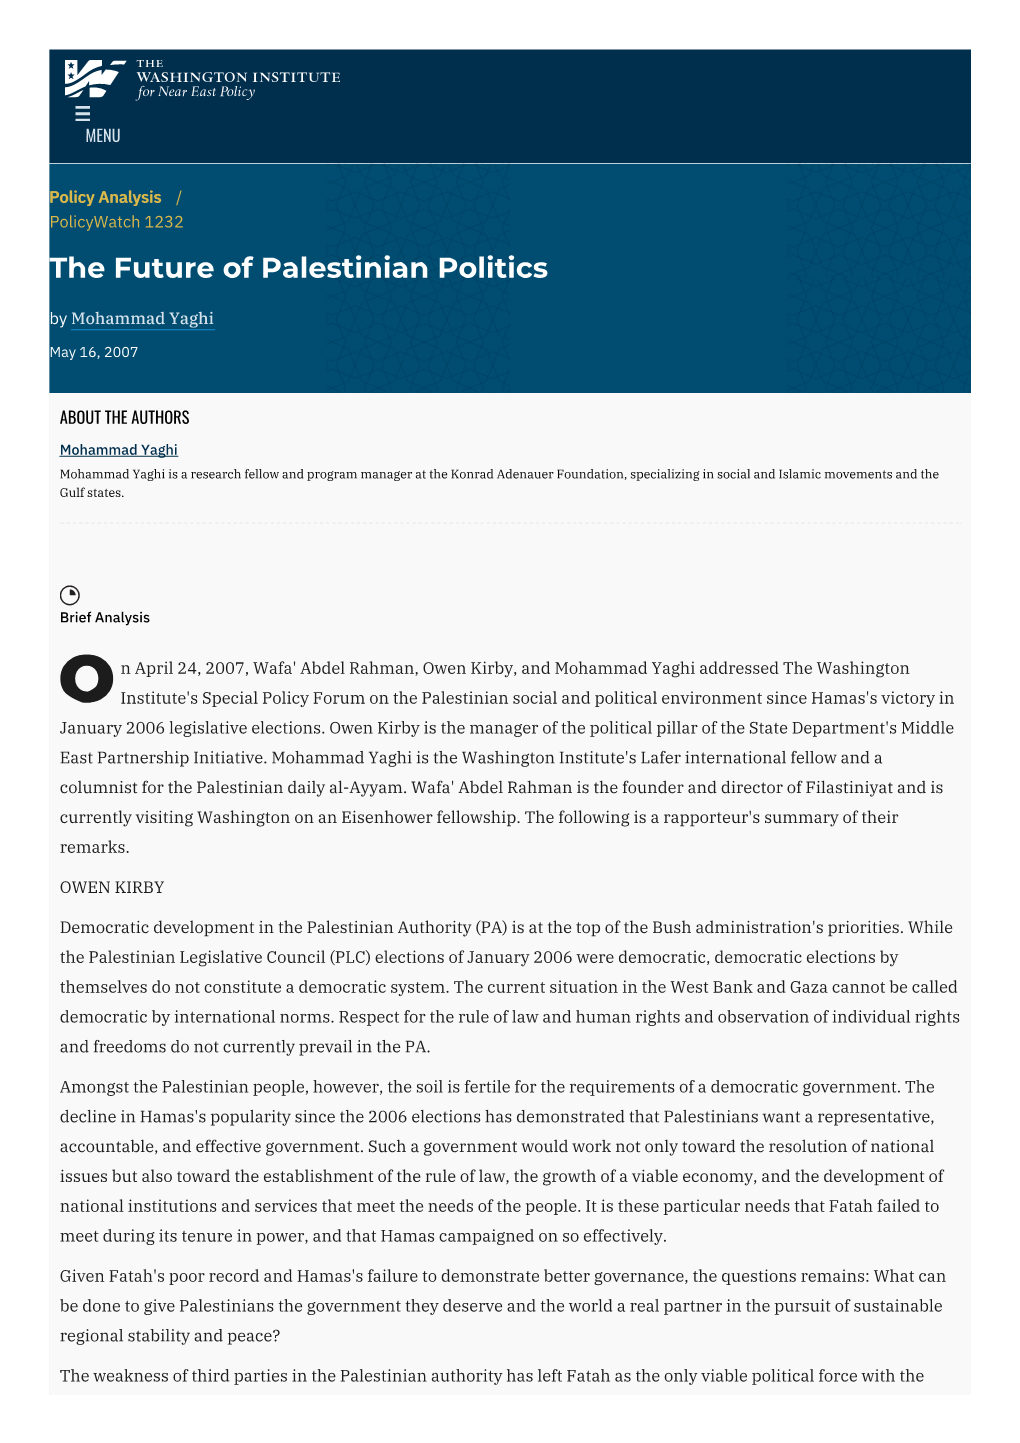 The Future of Palestinian Politics | the Washington Institute